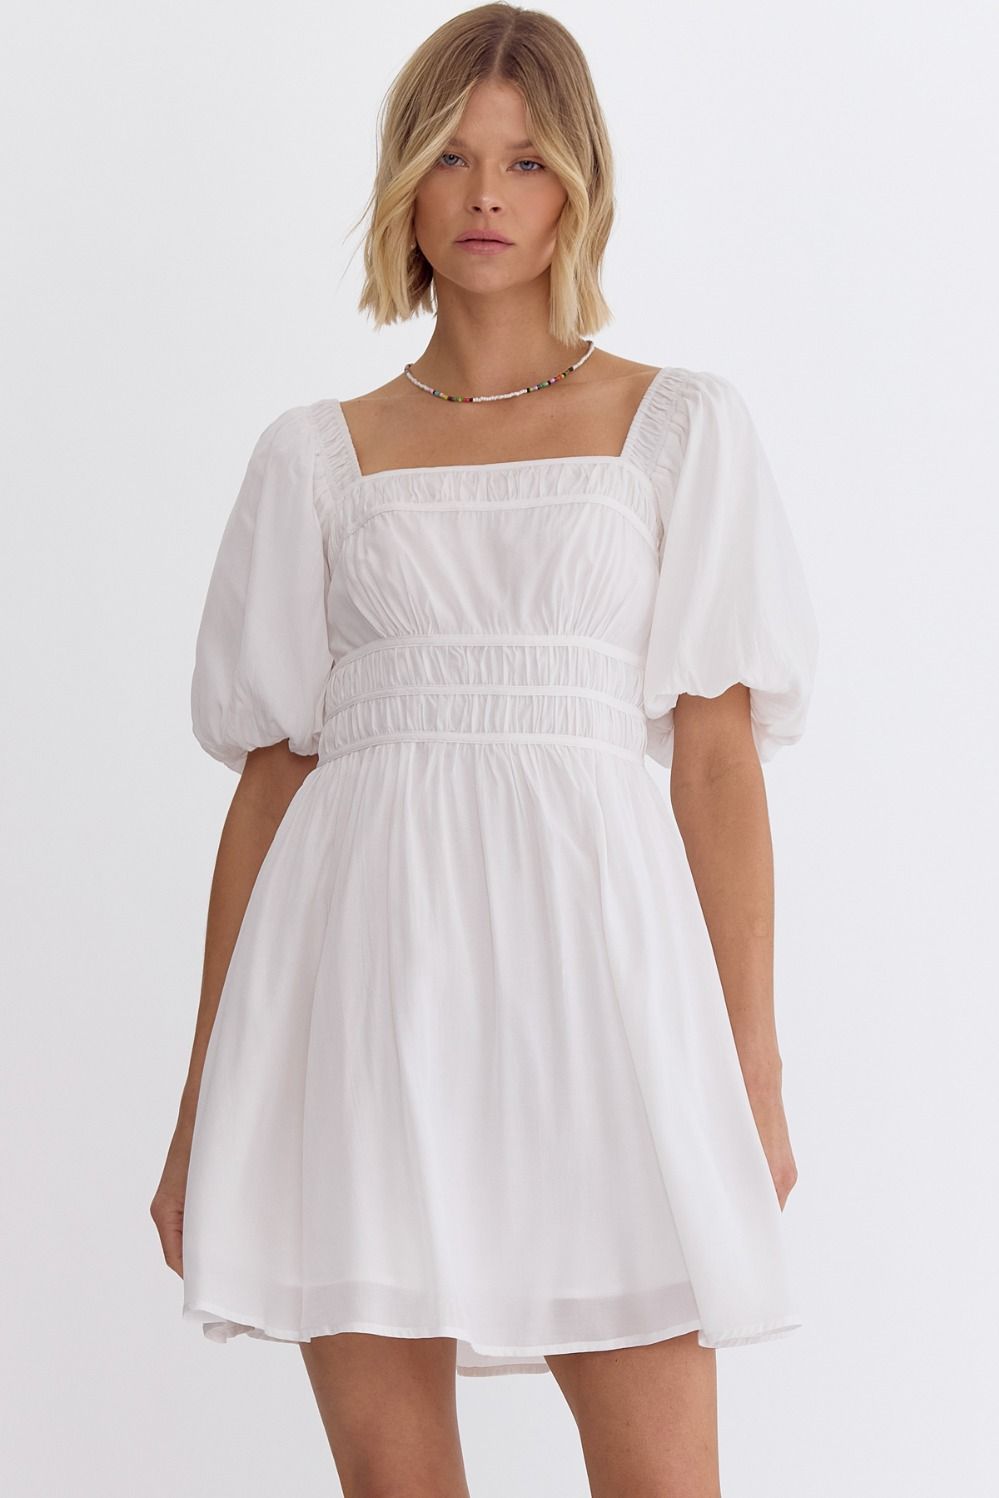 Solid Choice Off White Dress – Ribbon Chix